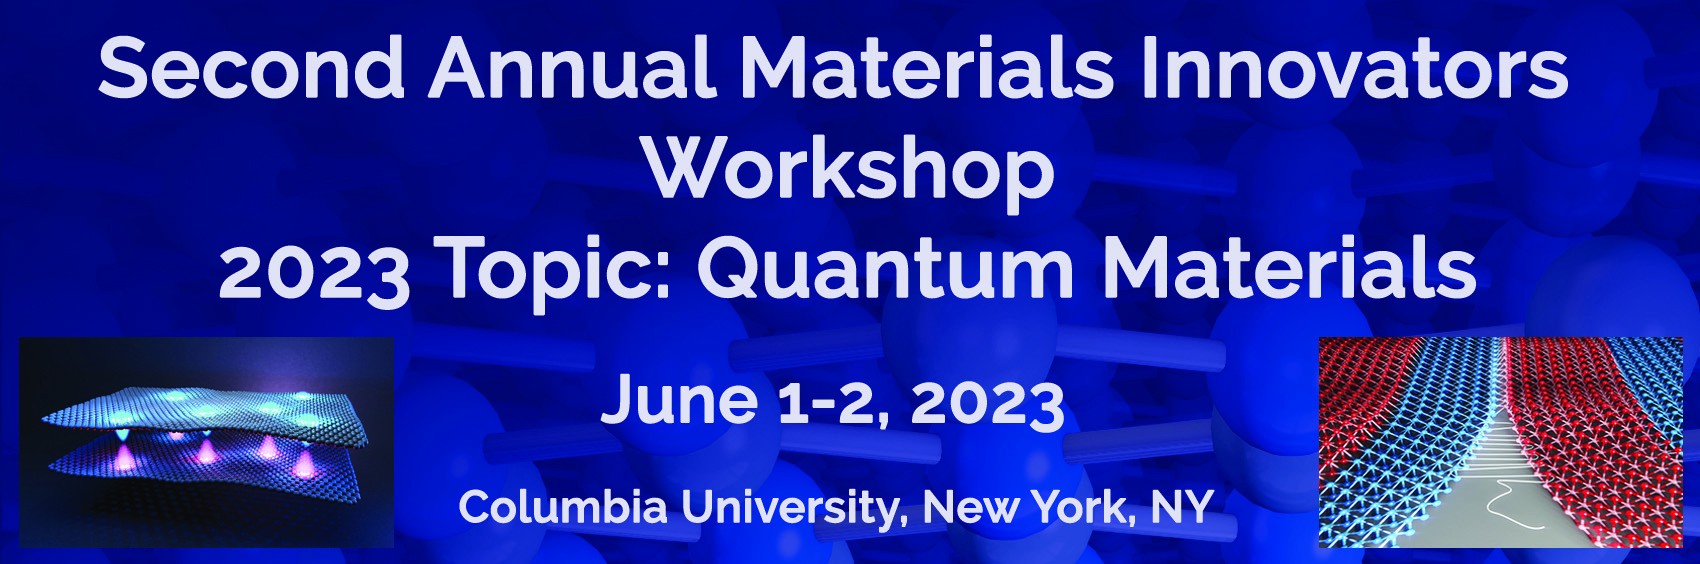 Second Annual Materials Innovators Workshop on Quantum Materials